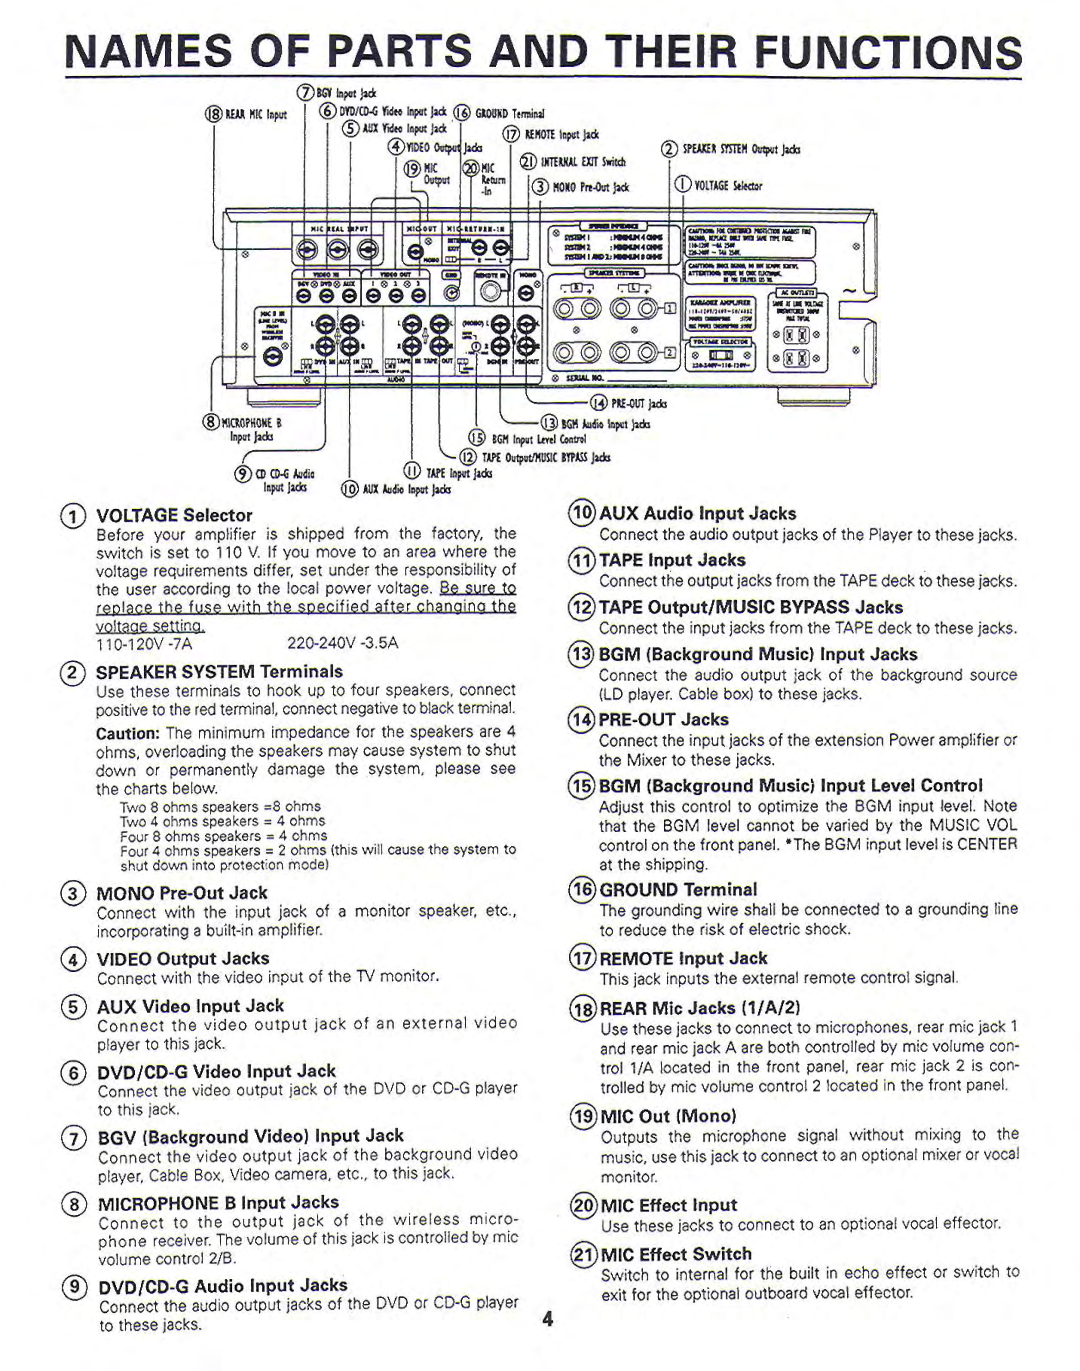 VocoPro DA-8900 manual 